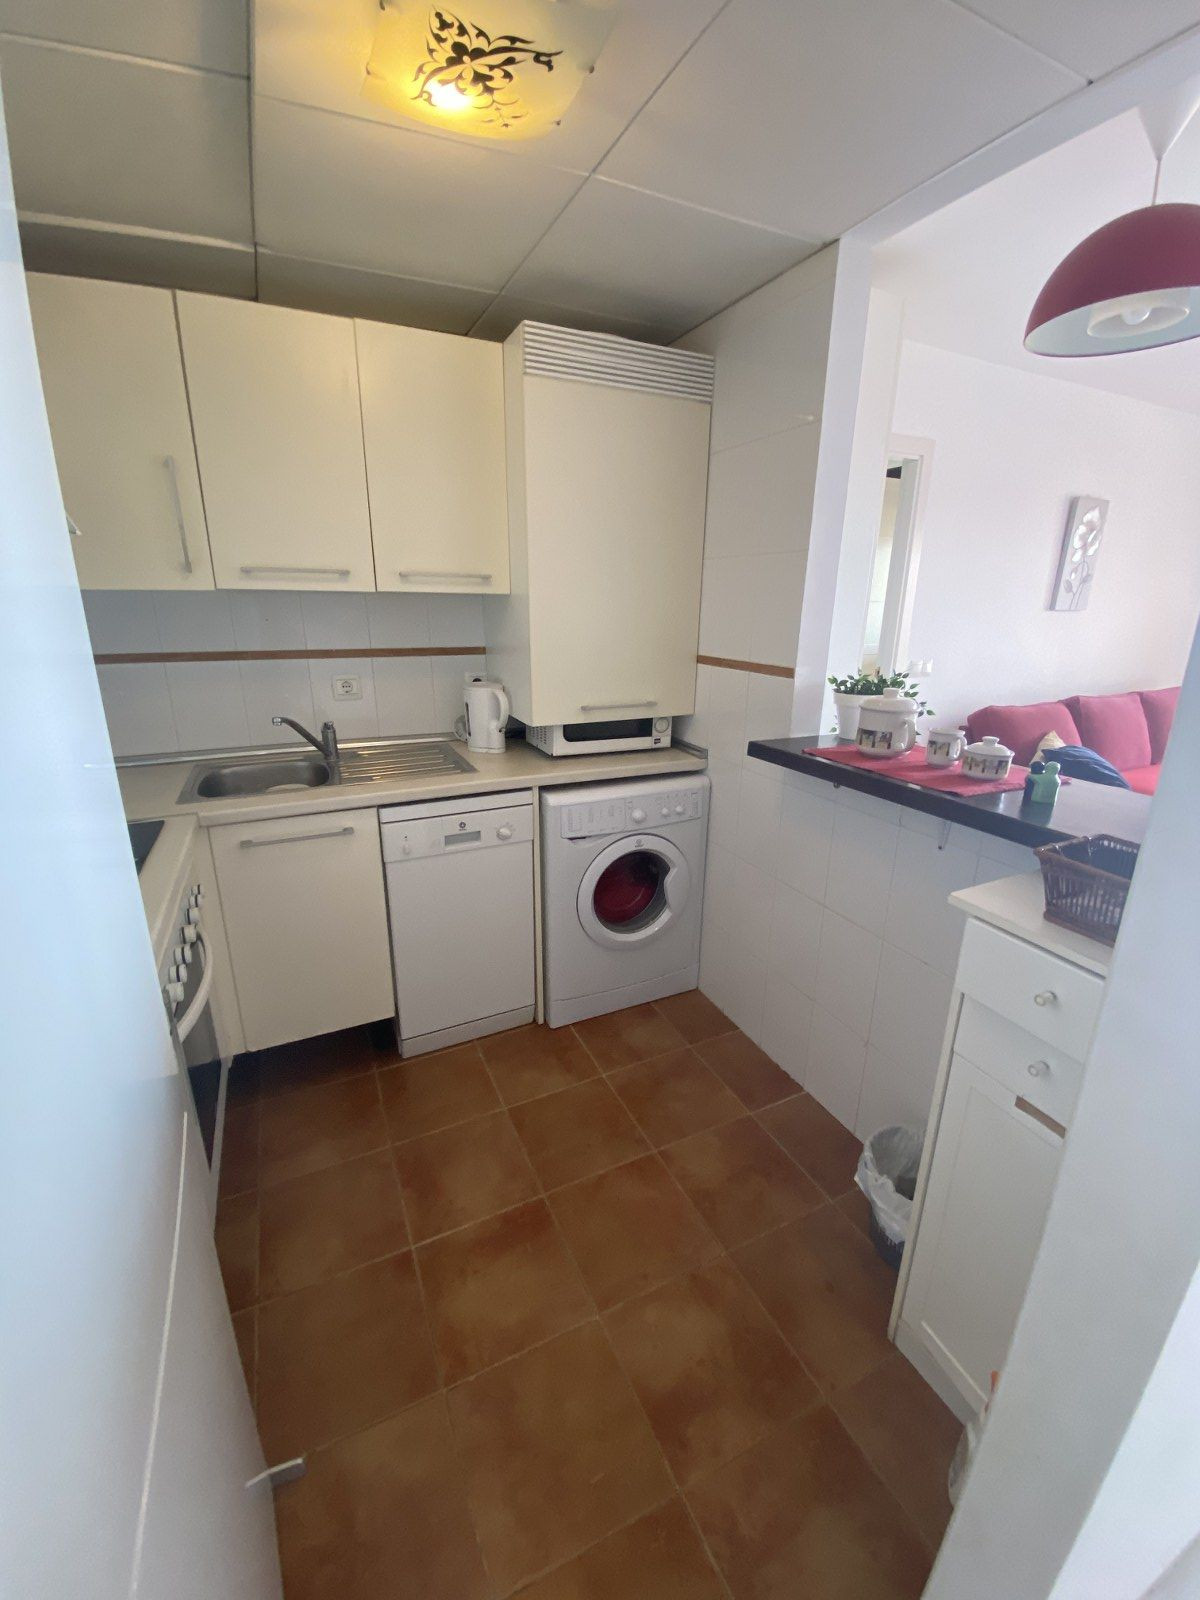 2 bedroom Apartment For Sale in Benalmadena, Málaga - thumb 12